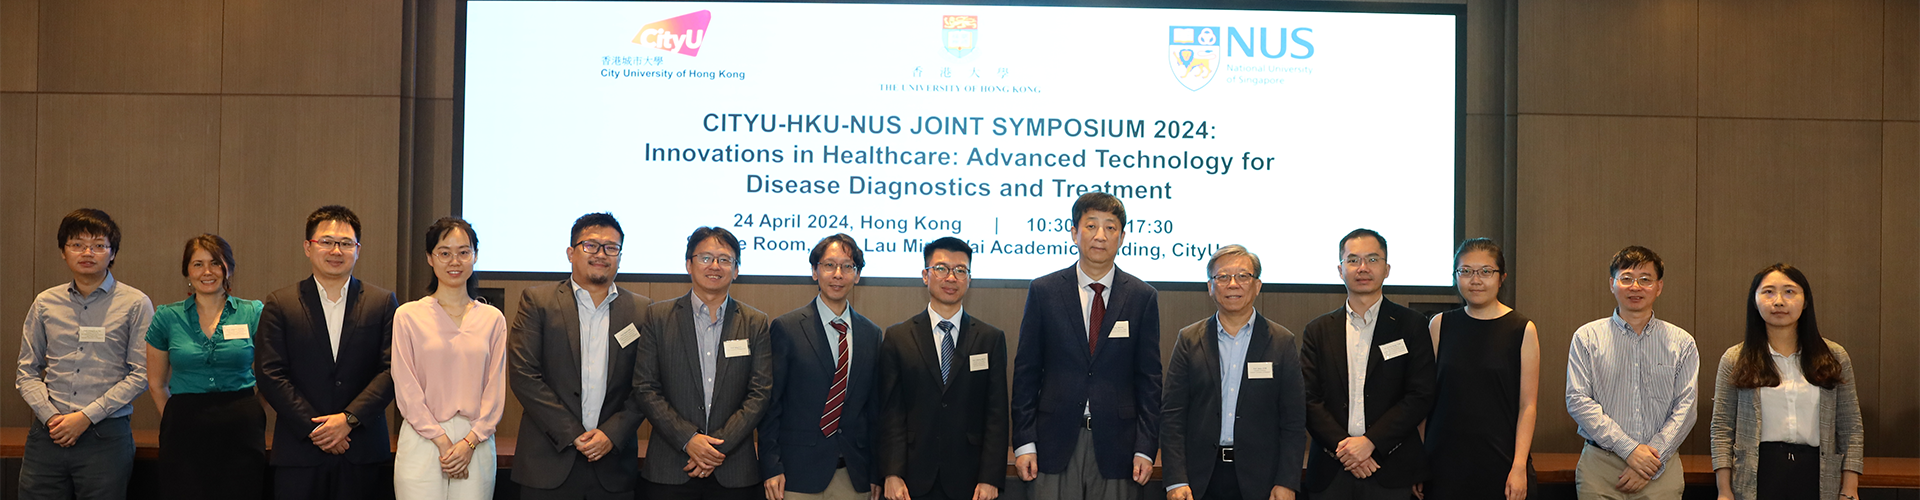 CityU-HKU-NUS Joint Symposium 2024